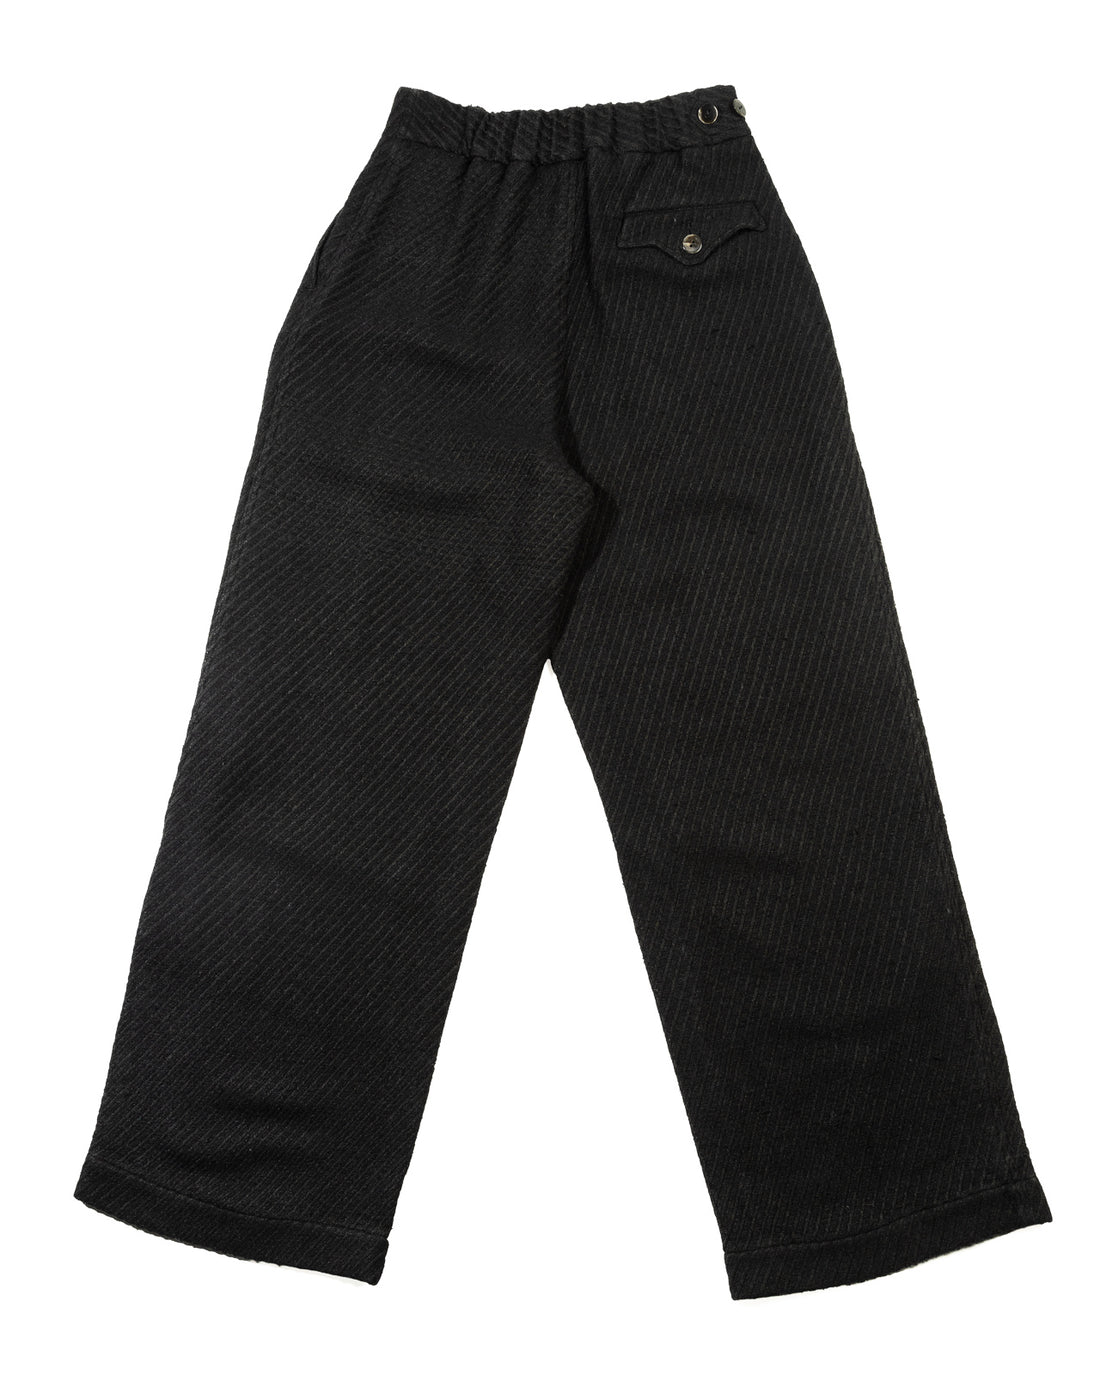 MotivMfg Oblique Trousers - Black Tussah Silk Tweed - Standard & Strange